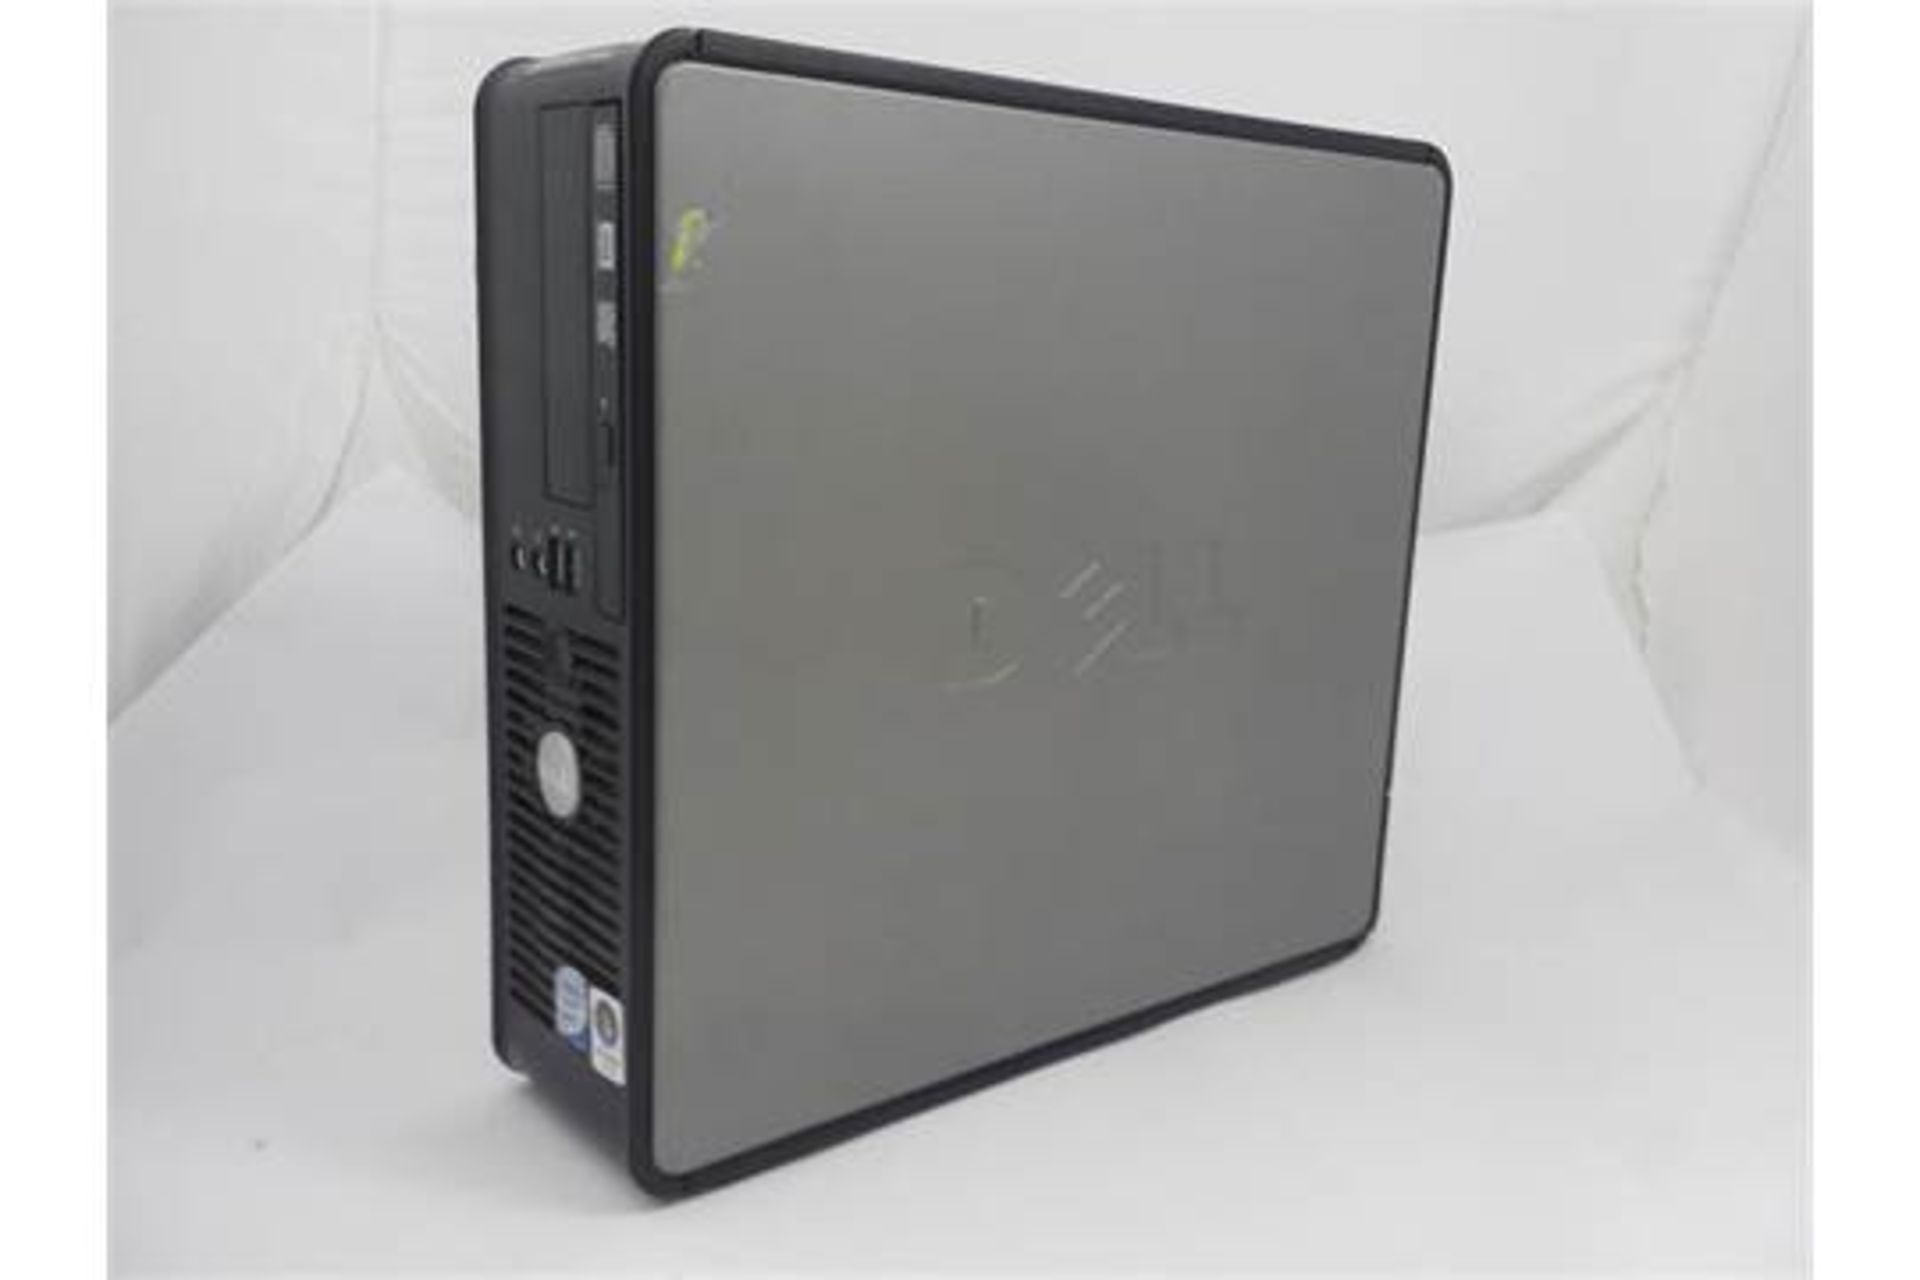 Dell Optiplex 755 - Ultra Small Form Factor PC - Intel 2.4GHz Processor. 2GB MEMORY. 80GB HARD - Image 2 of 4